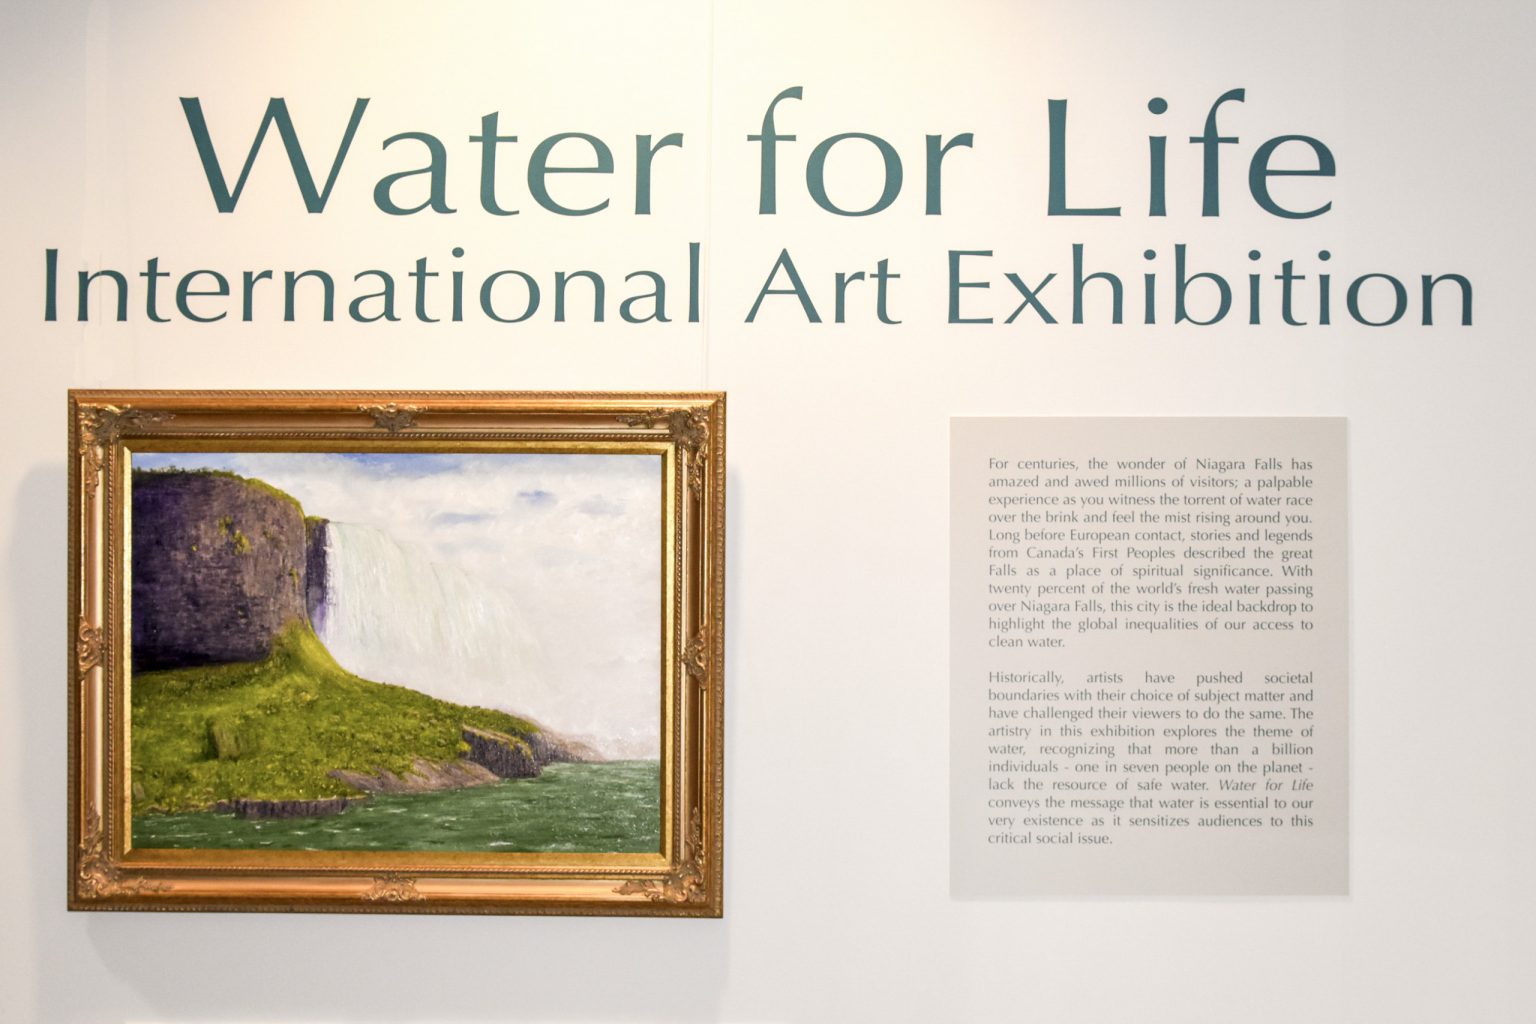 Water for Life, international Art Exhibition, First Edition, opening at the Niagara Falls History Museum, Niagara Falls.